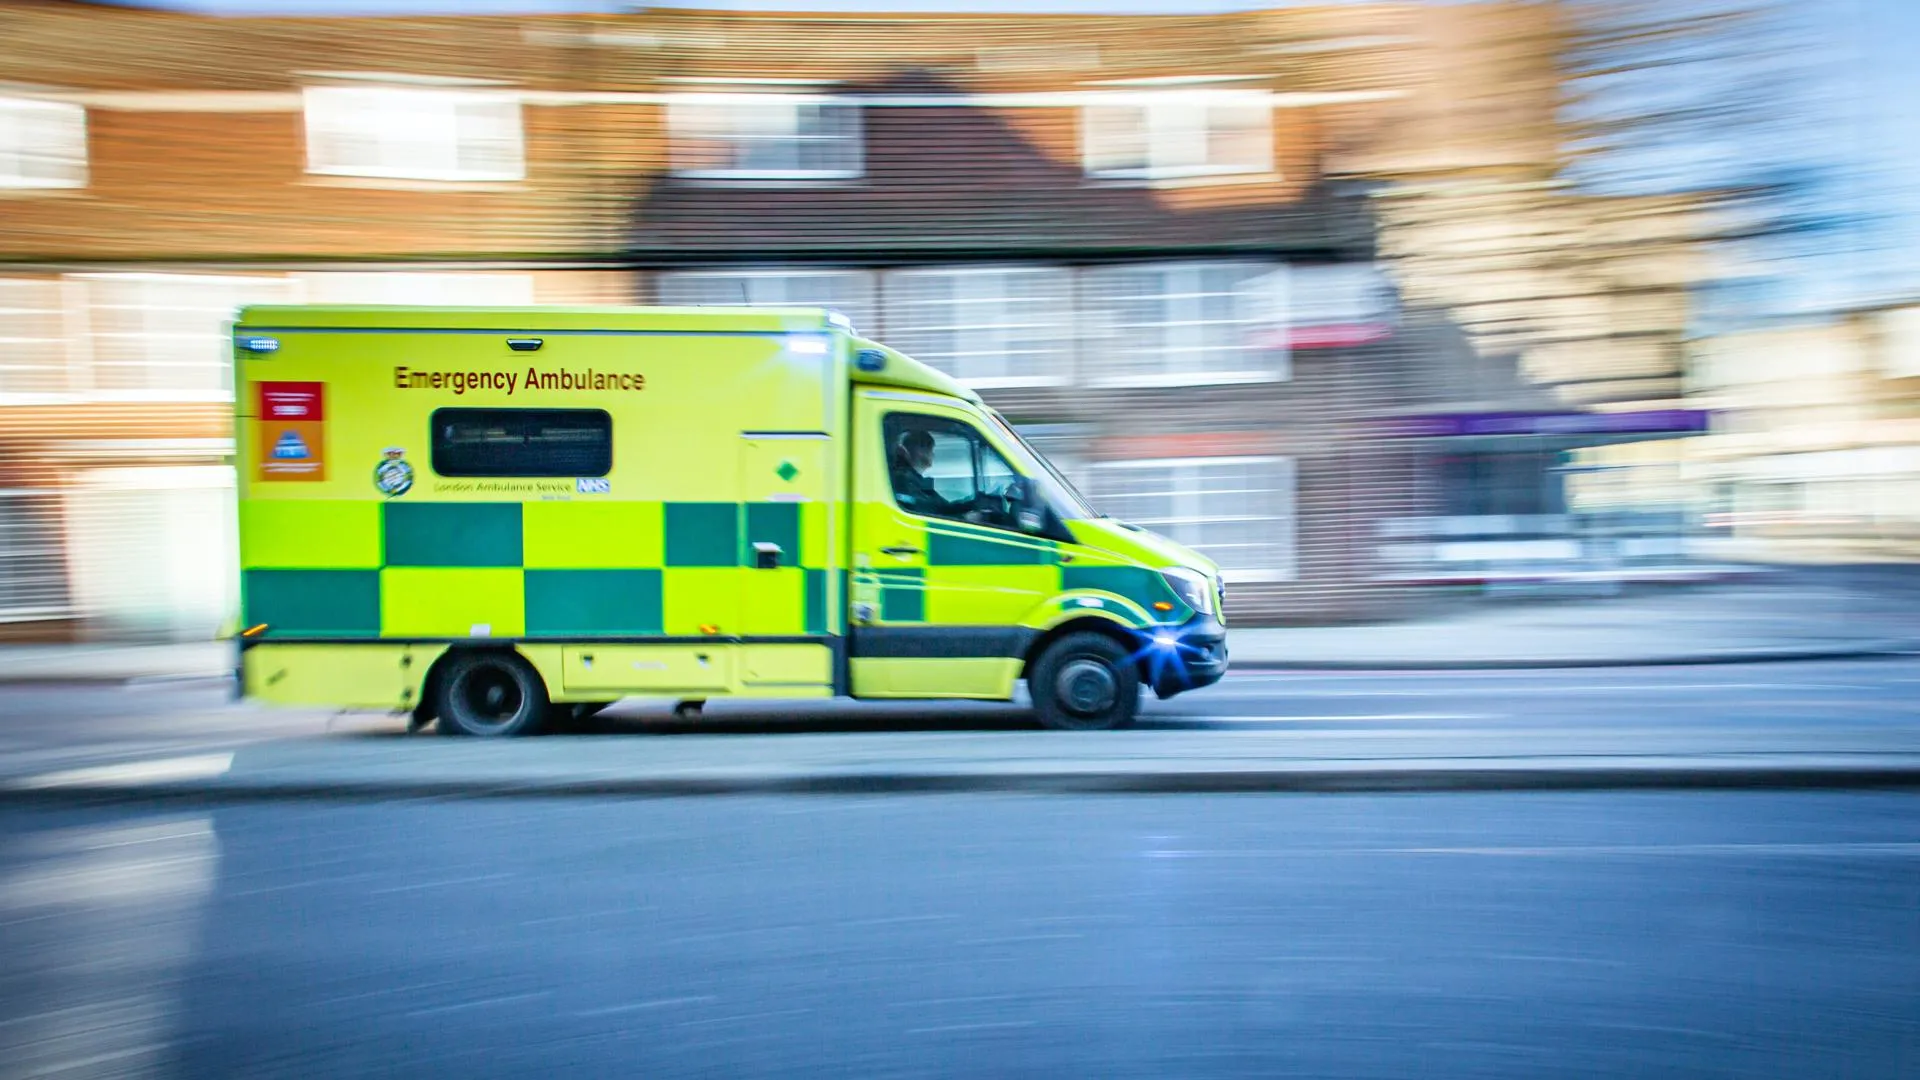 Ambulance in an emergency